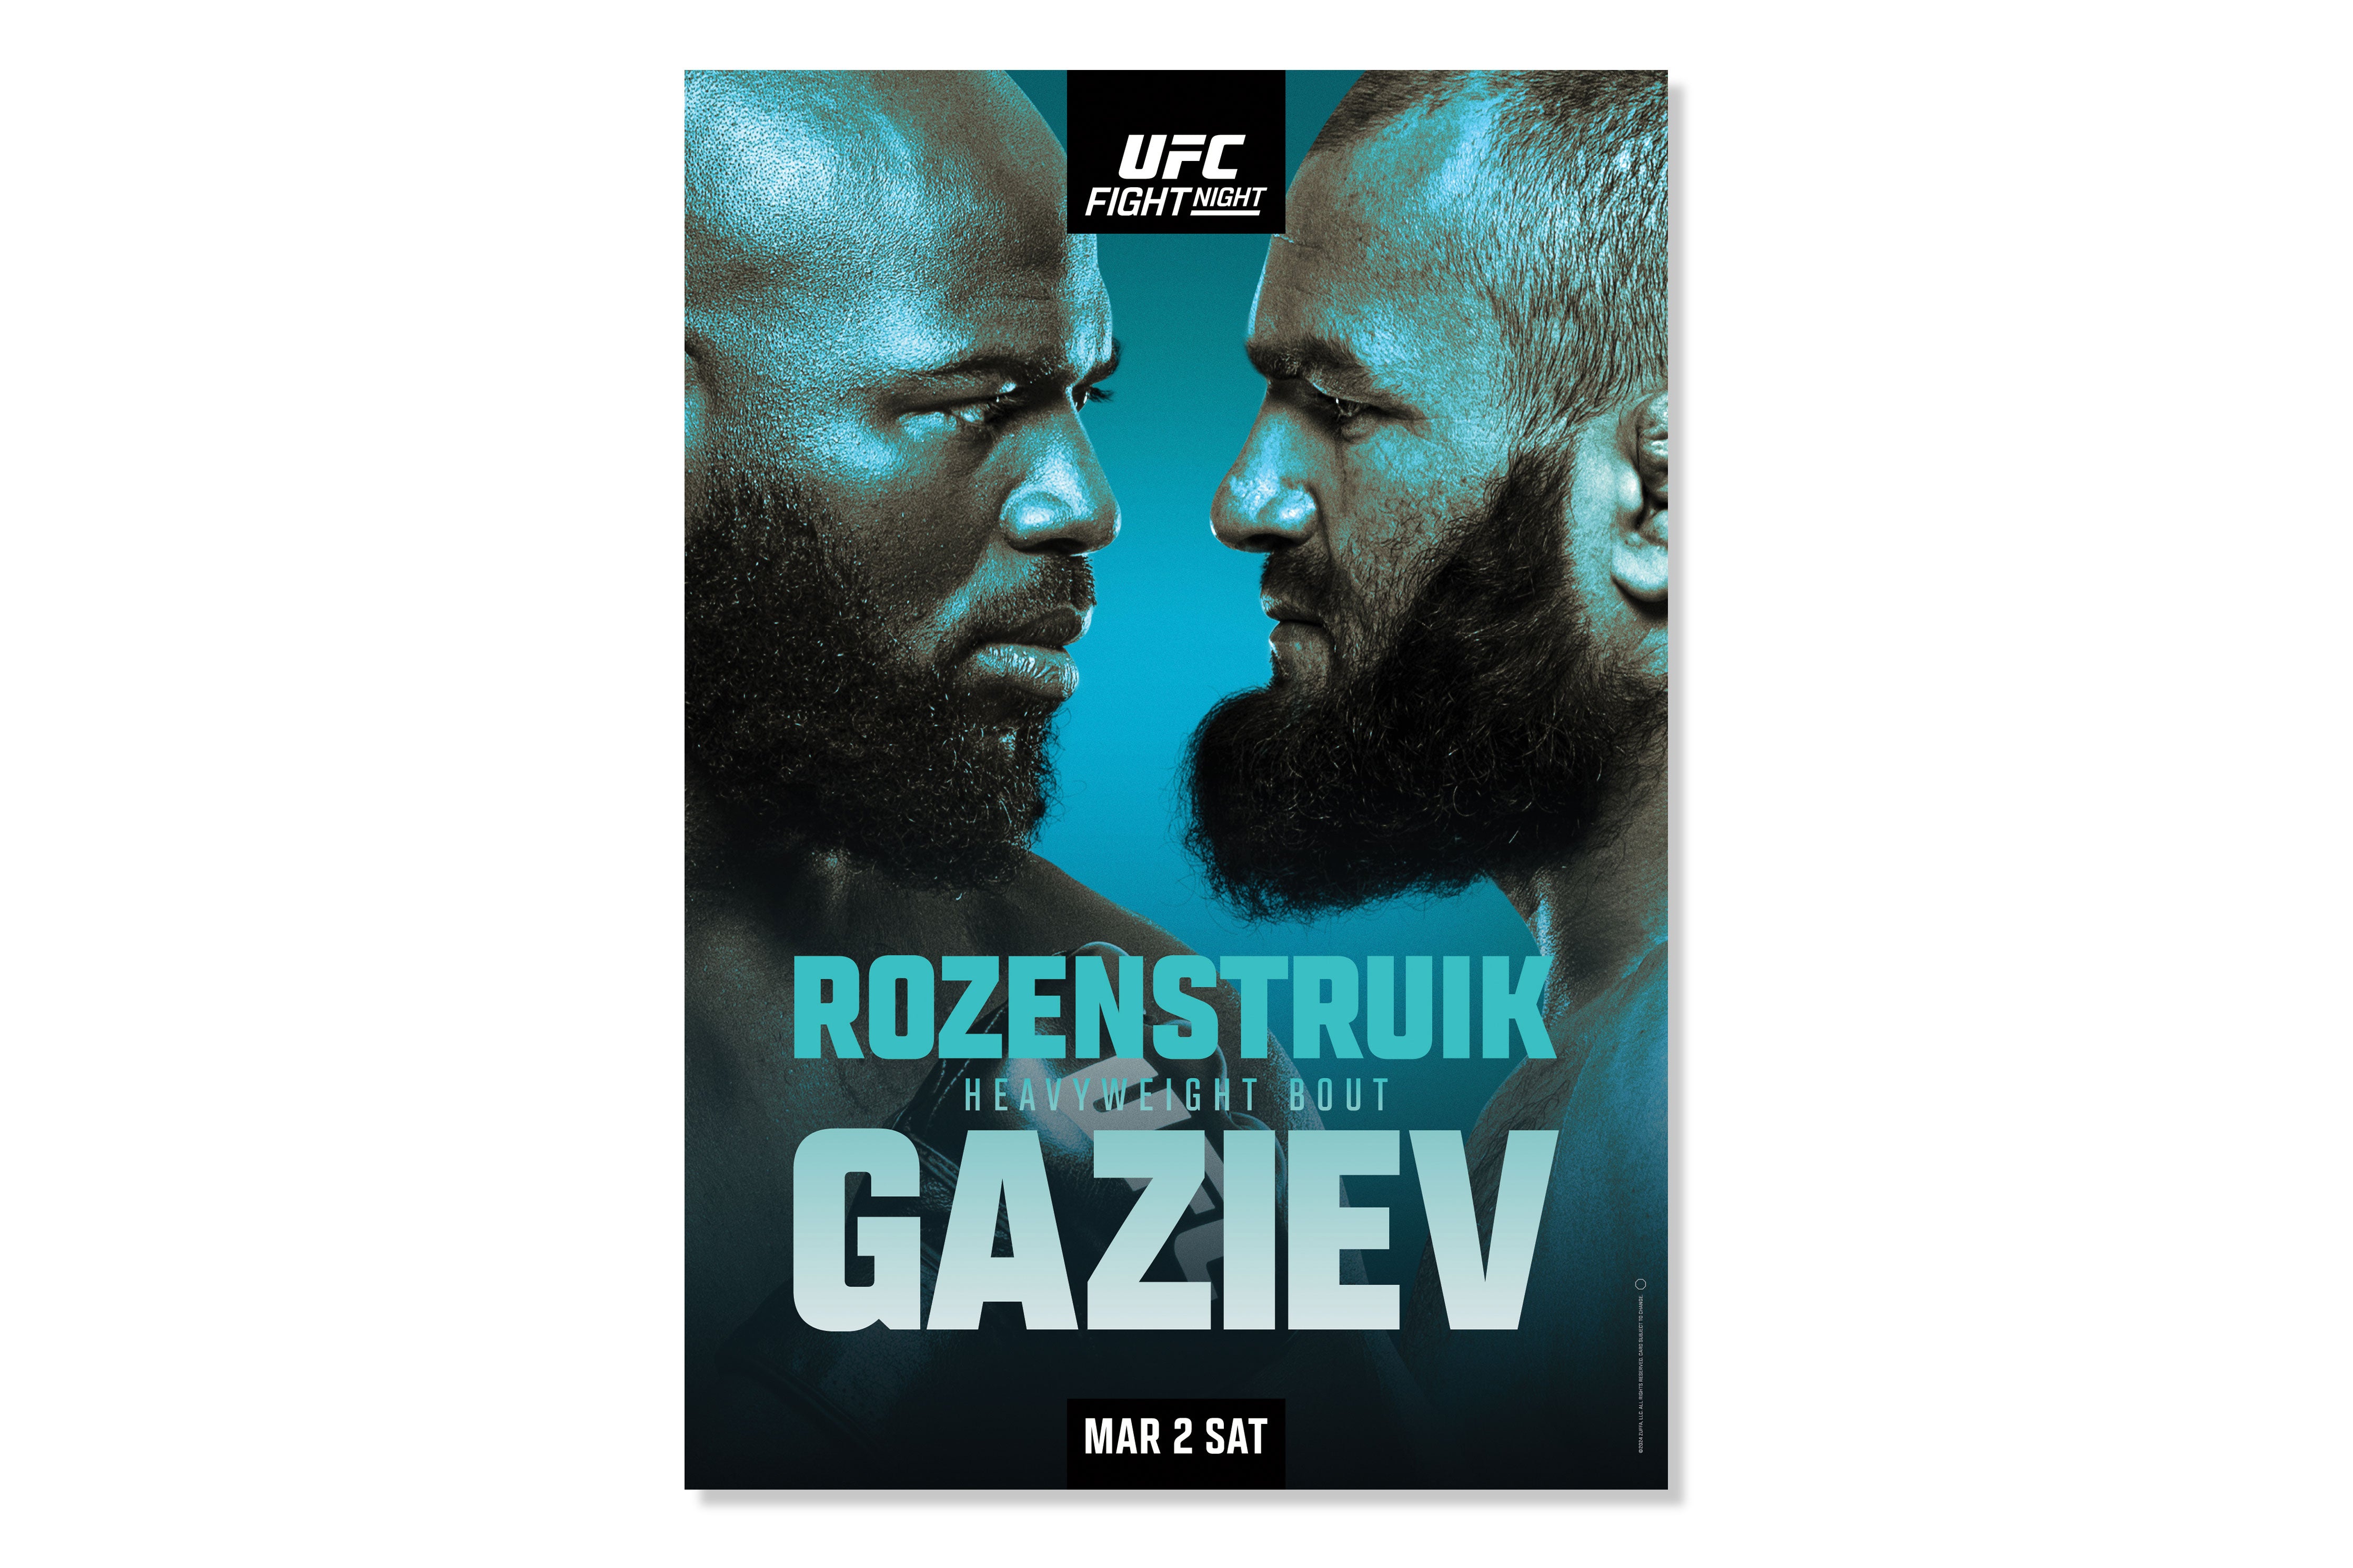 UFC Fight Night: Rozenstruik vs Gaziev Autographed Event Poster